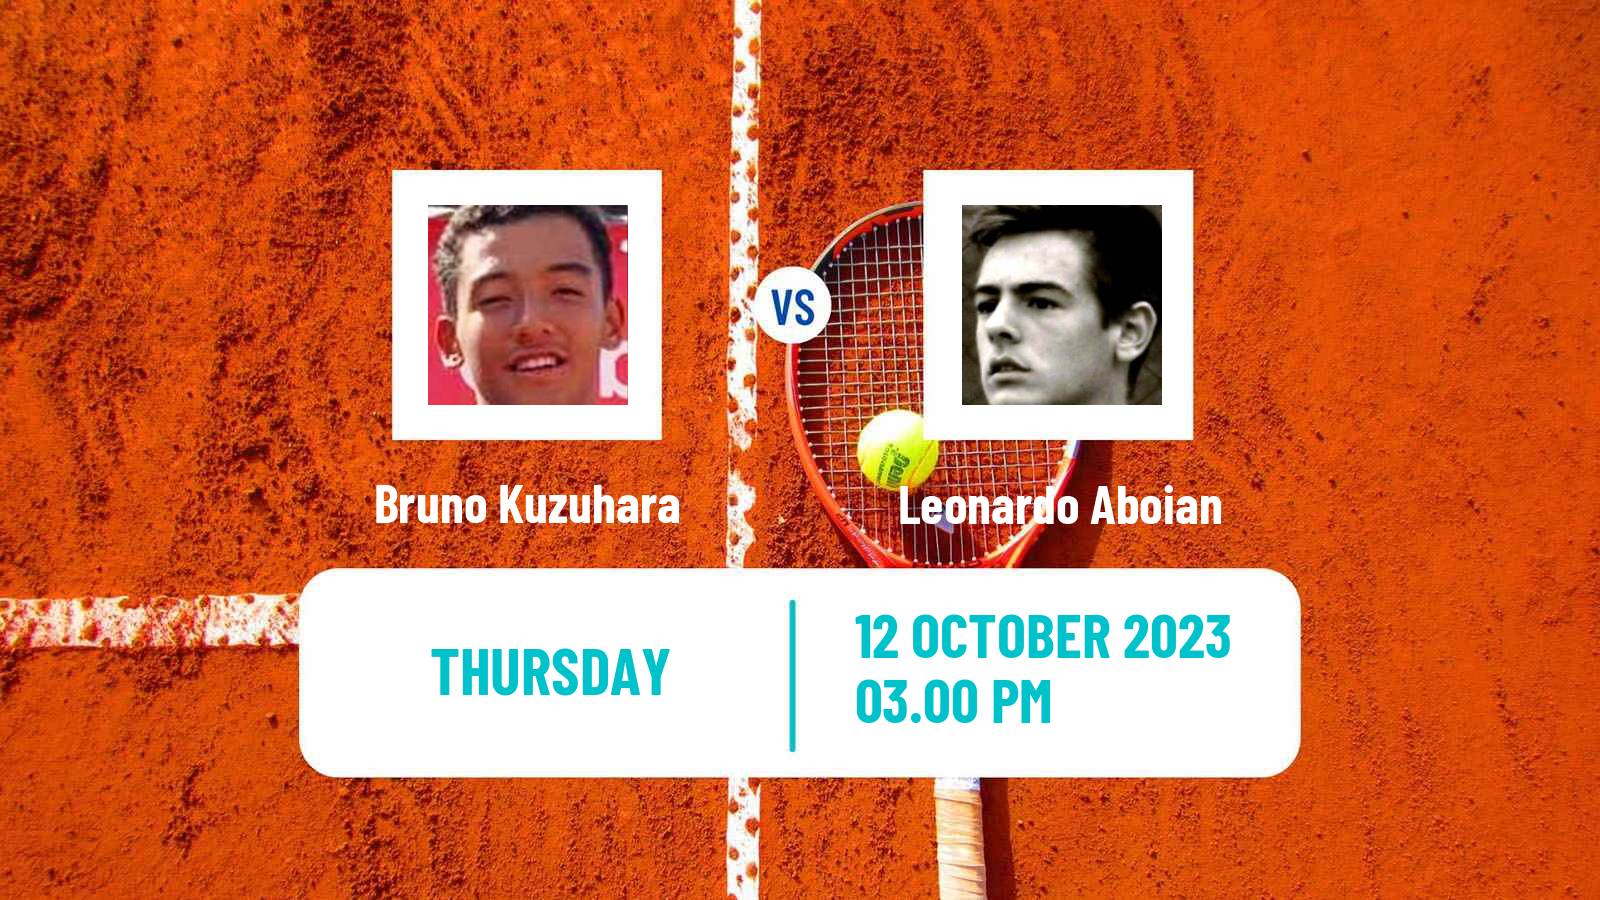 Tennis ITF M25 Lajeado Men Bruno Kuzuhara - Leonardo Aboian